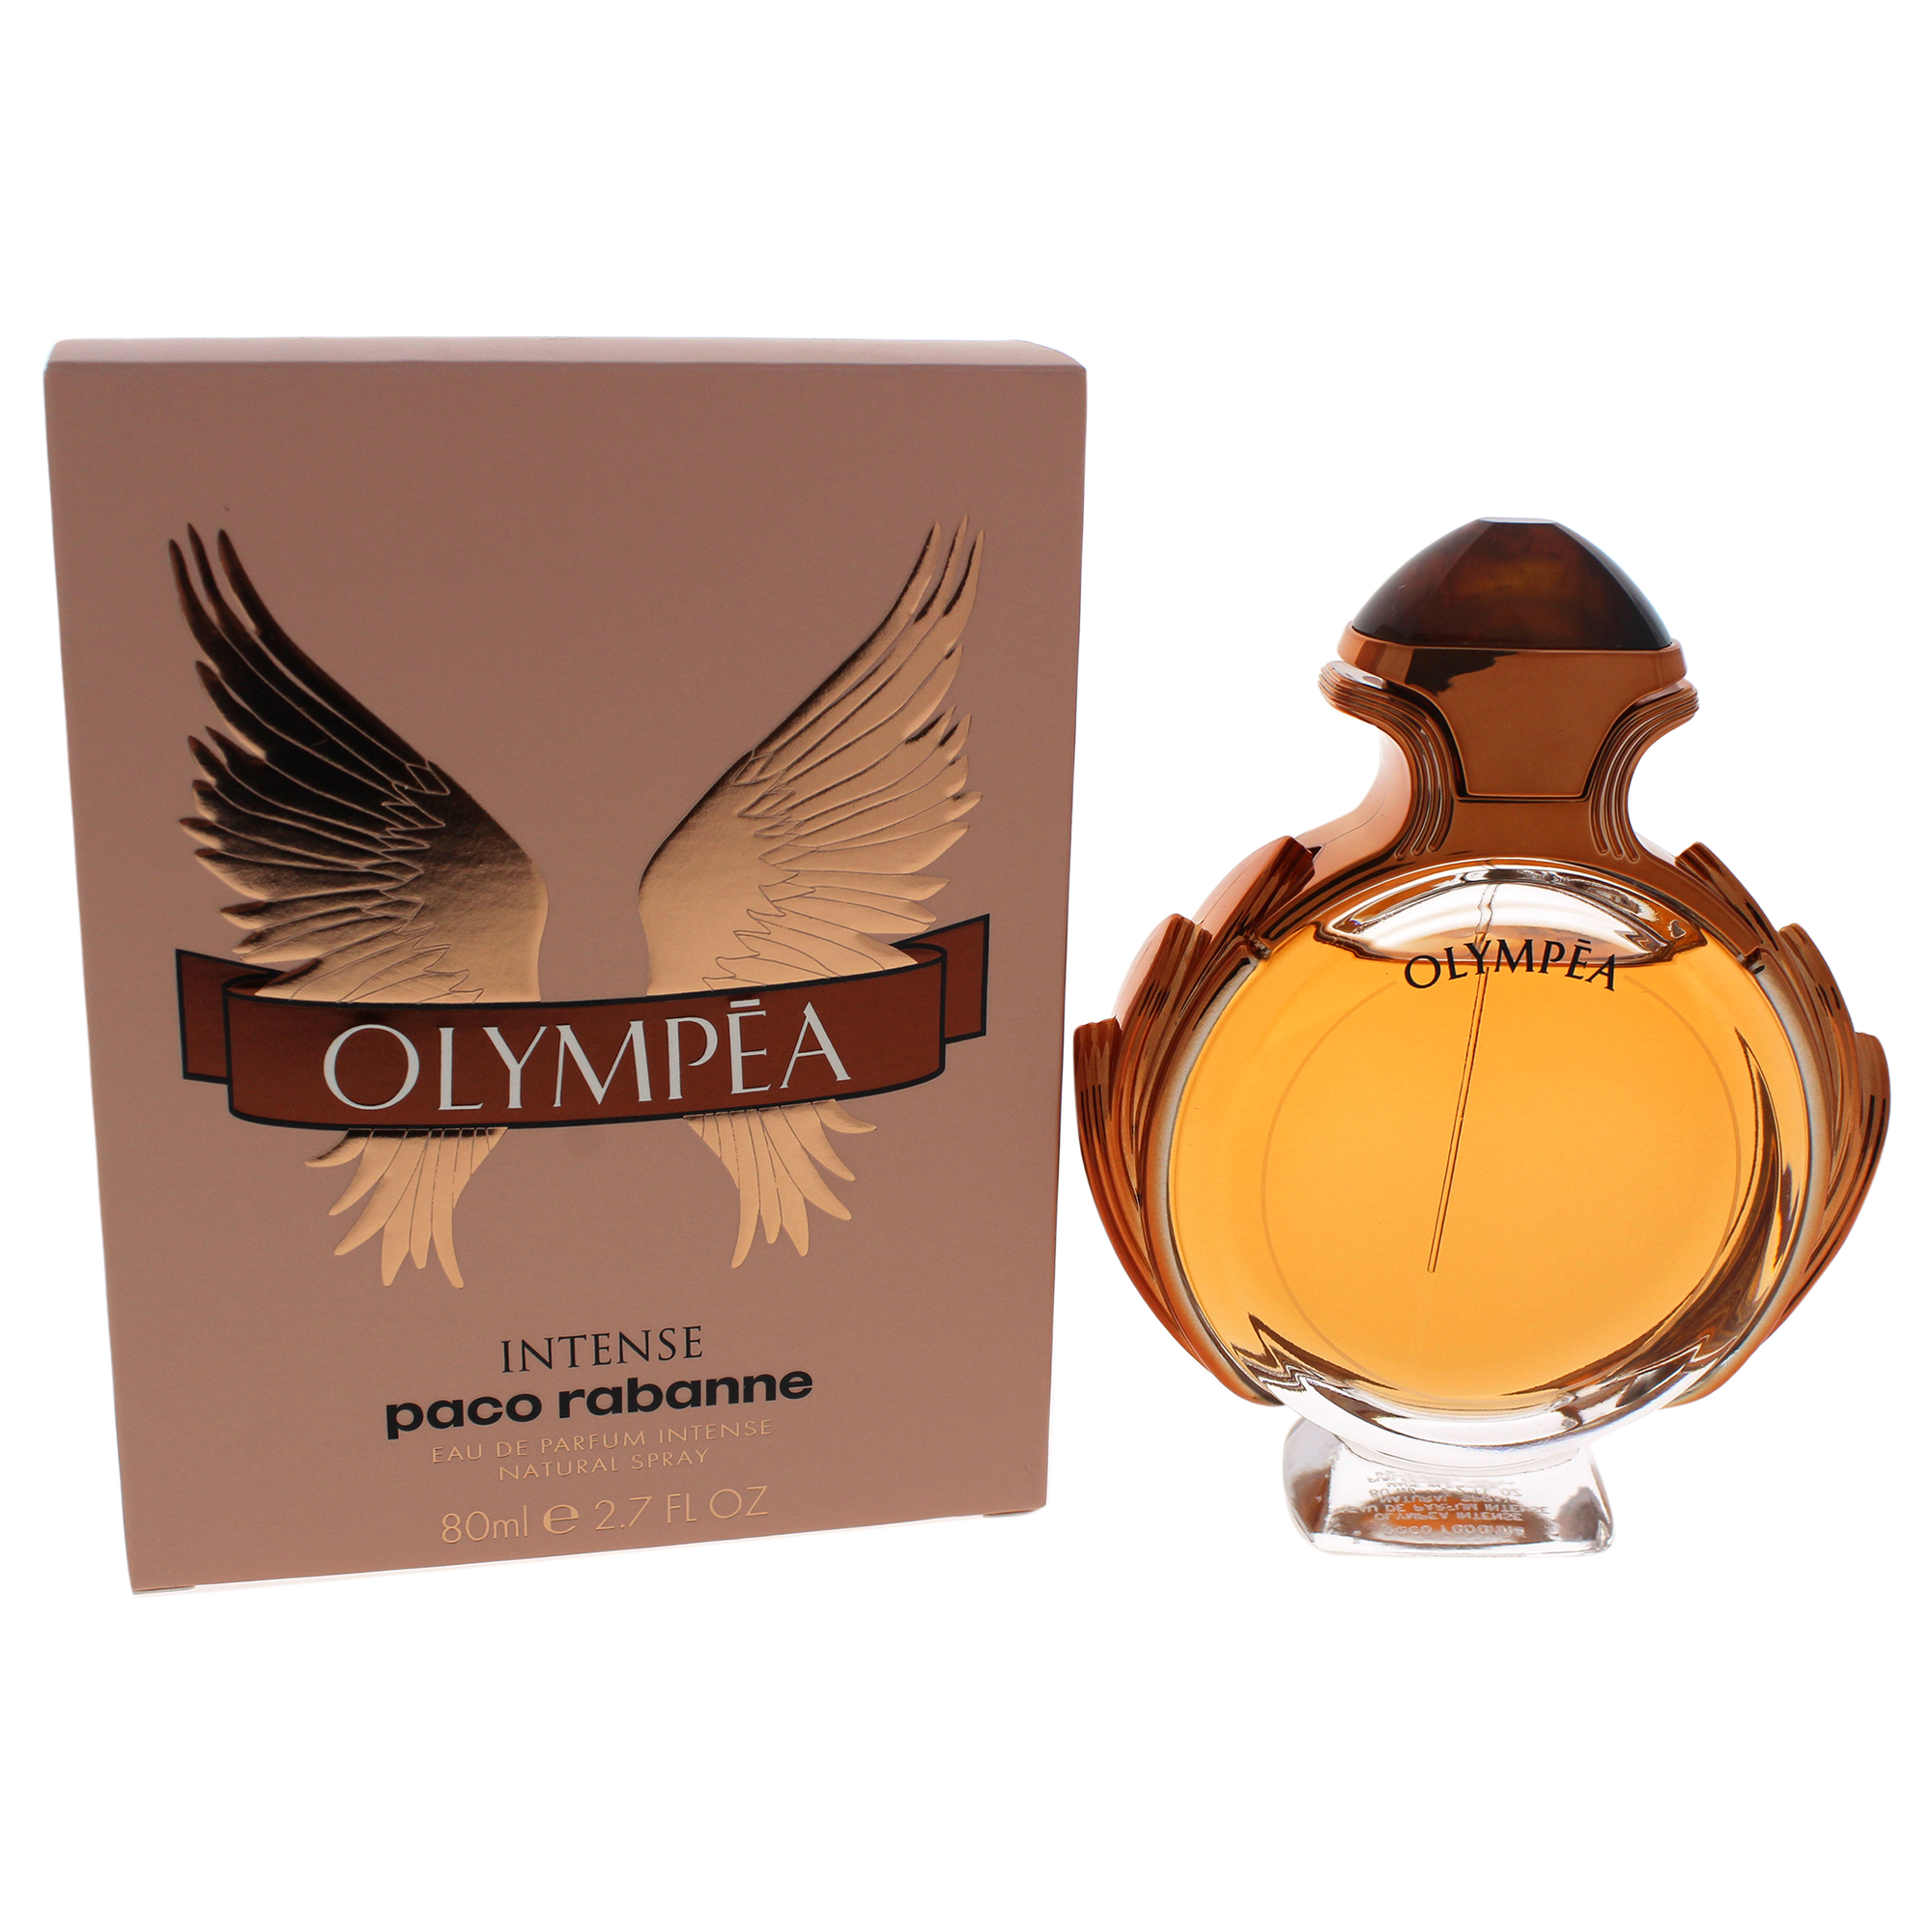 Paco Rabanne Olympea Intense Eau De Parfum Spray for Women 2.7 oz - image 2 of 9